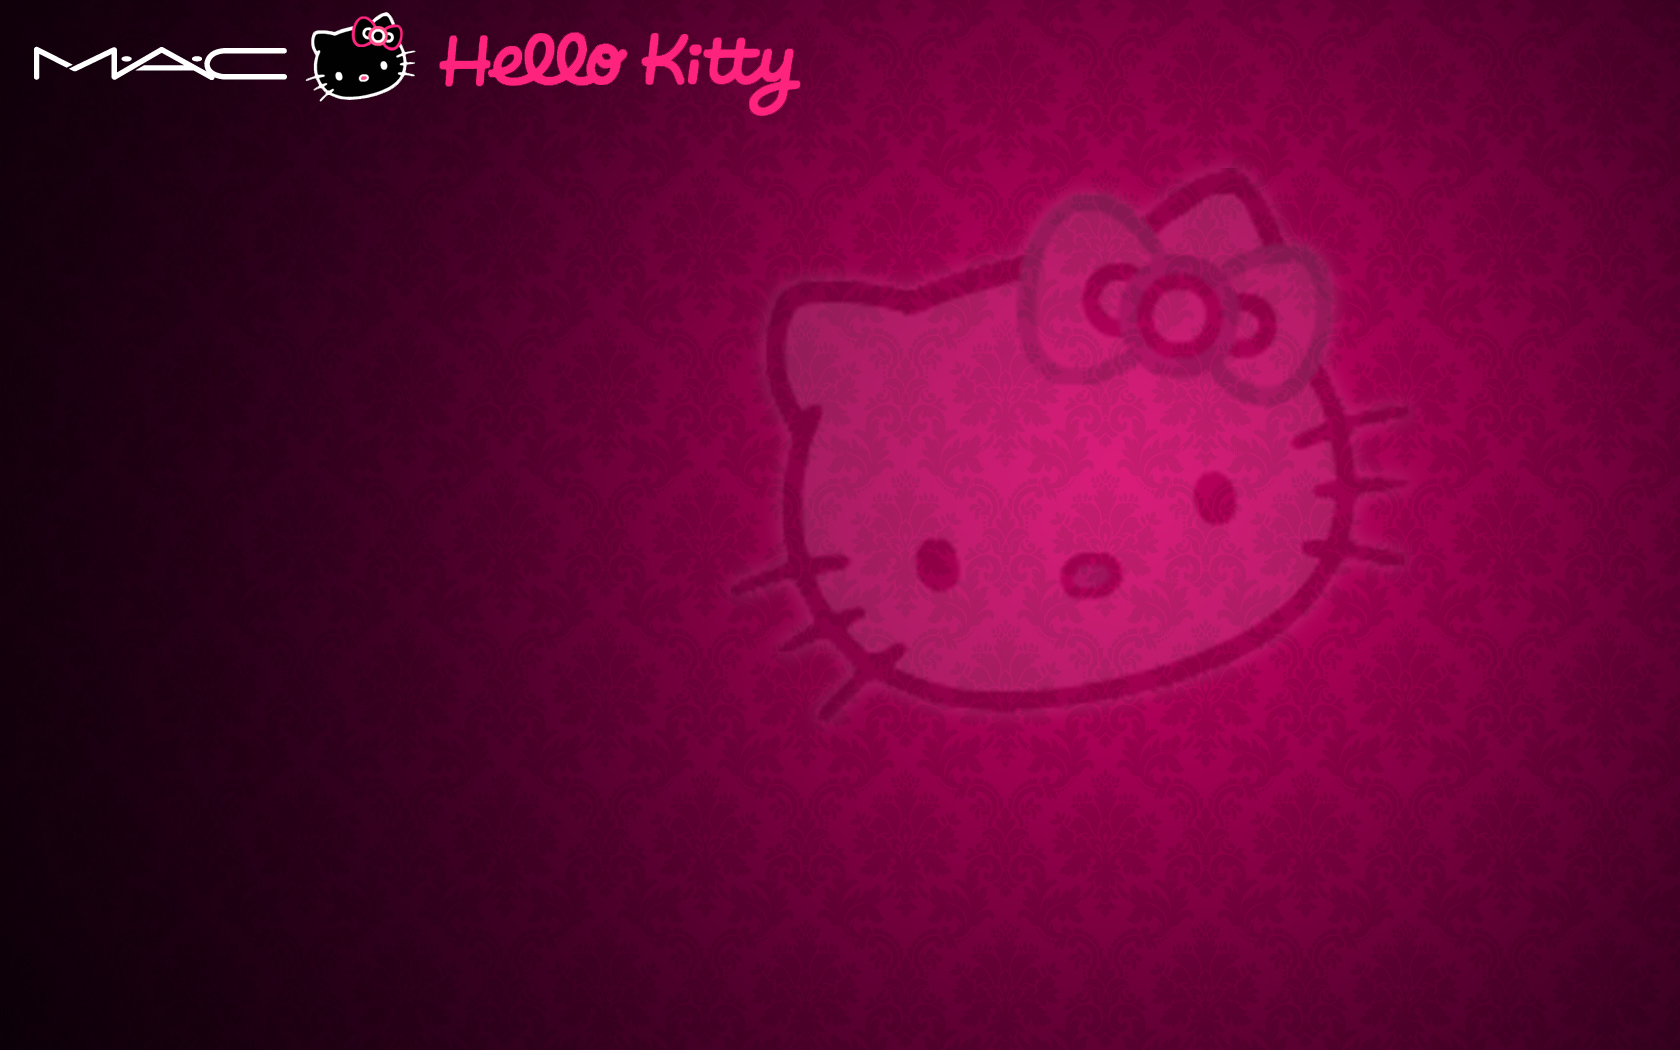 Permalink Hello Kitty Wallpaper